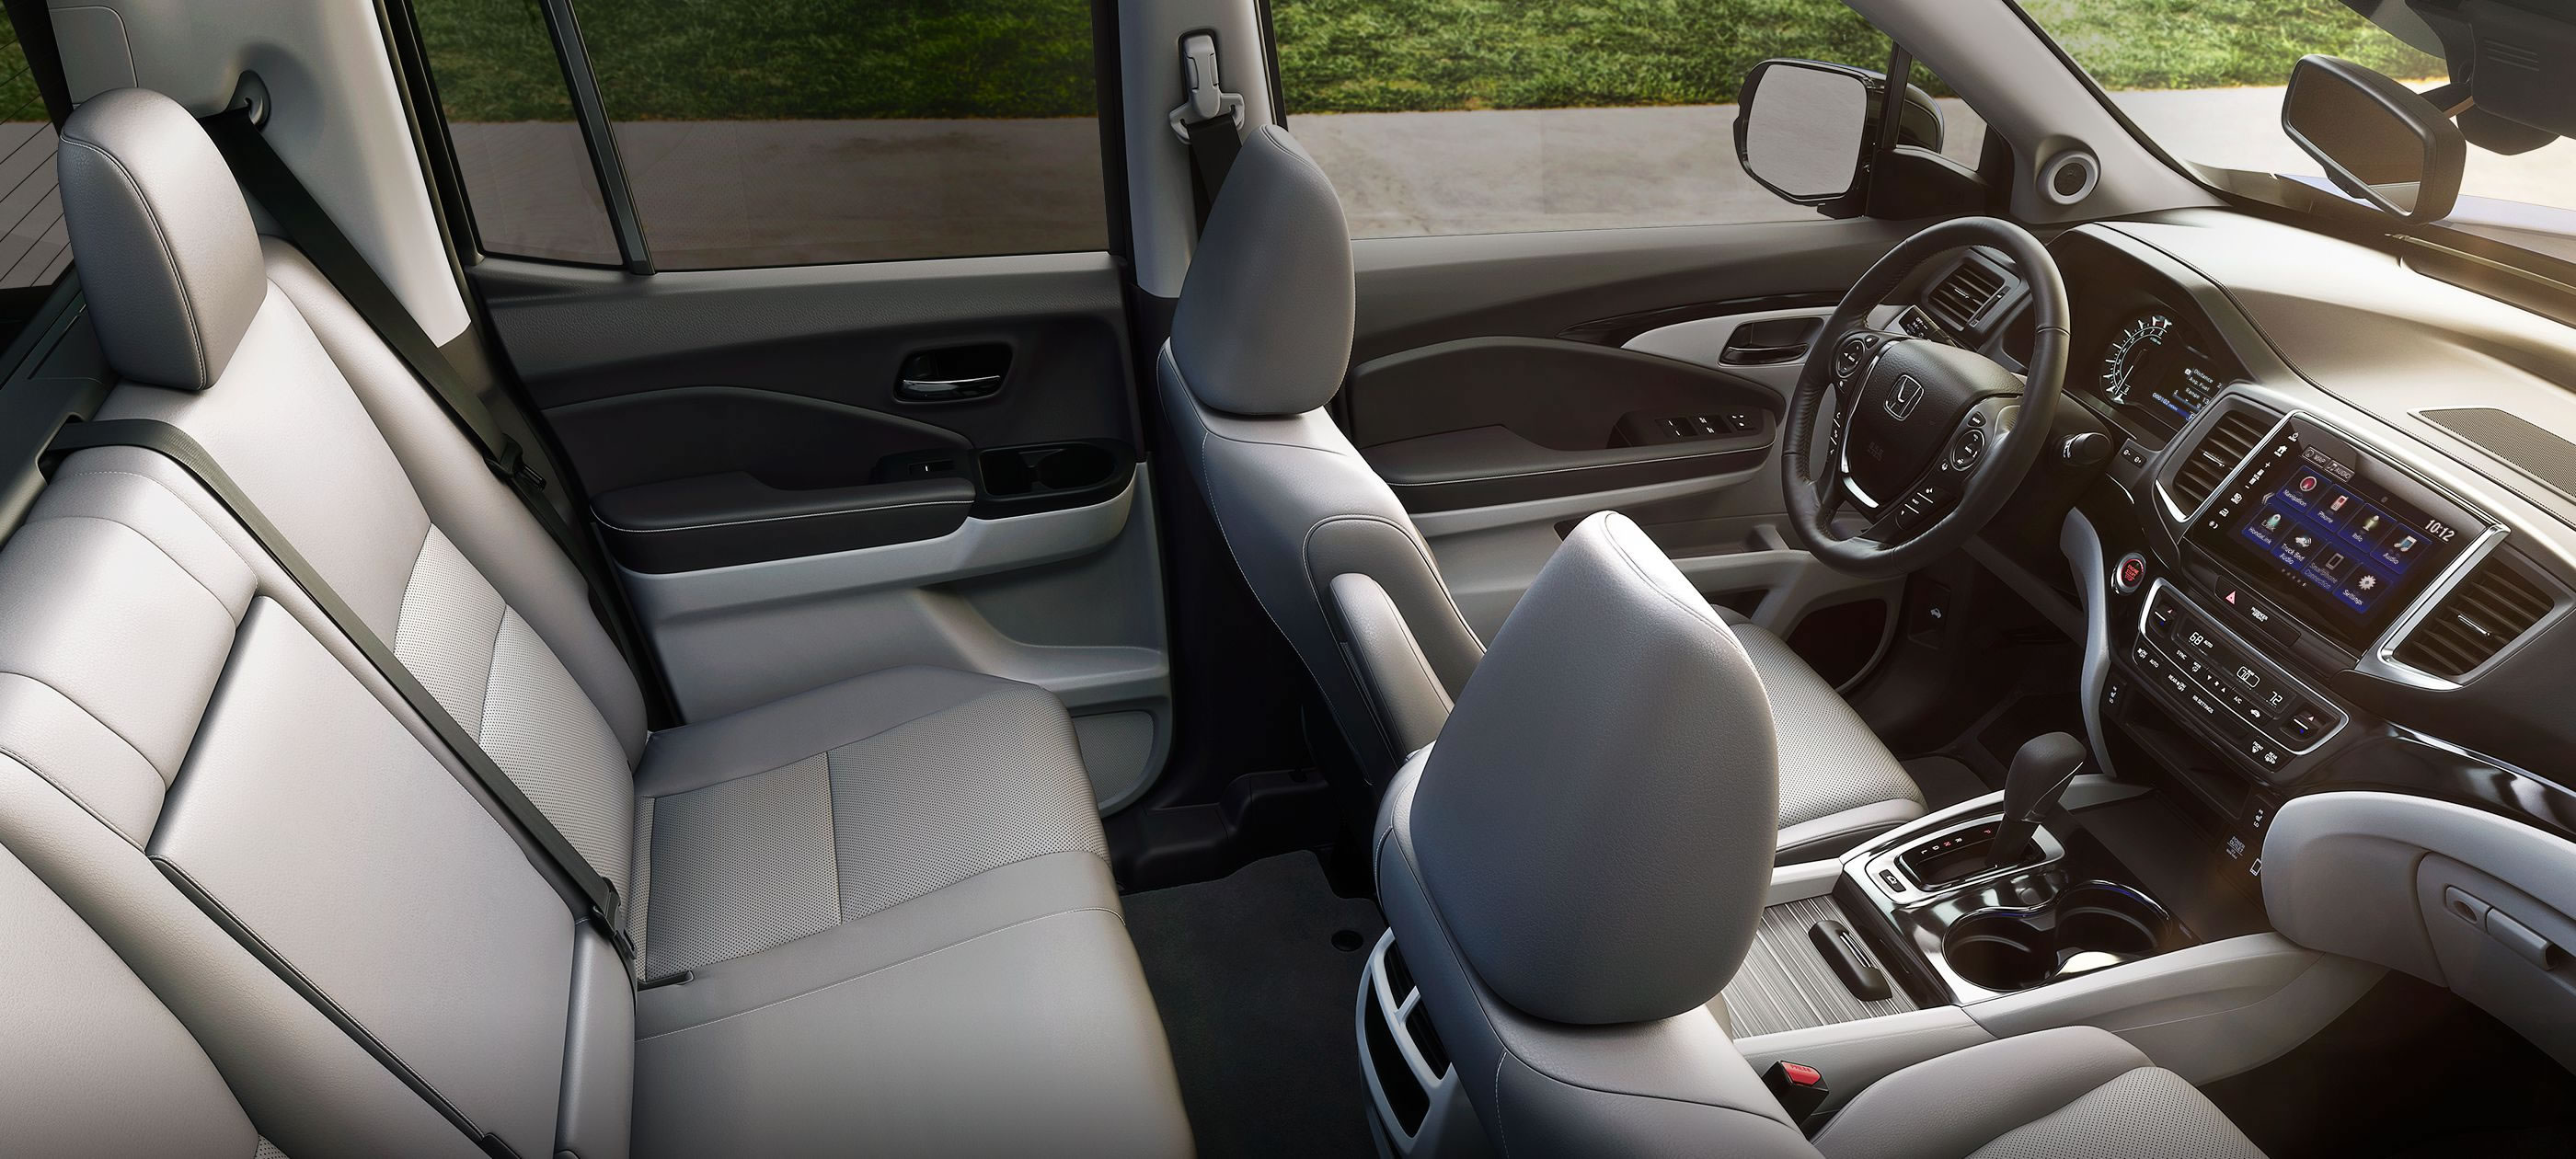 Honda Ridgeline interior - Seats